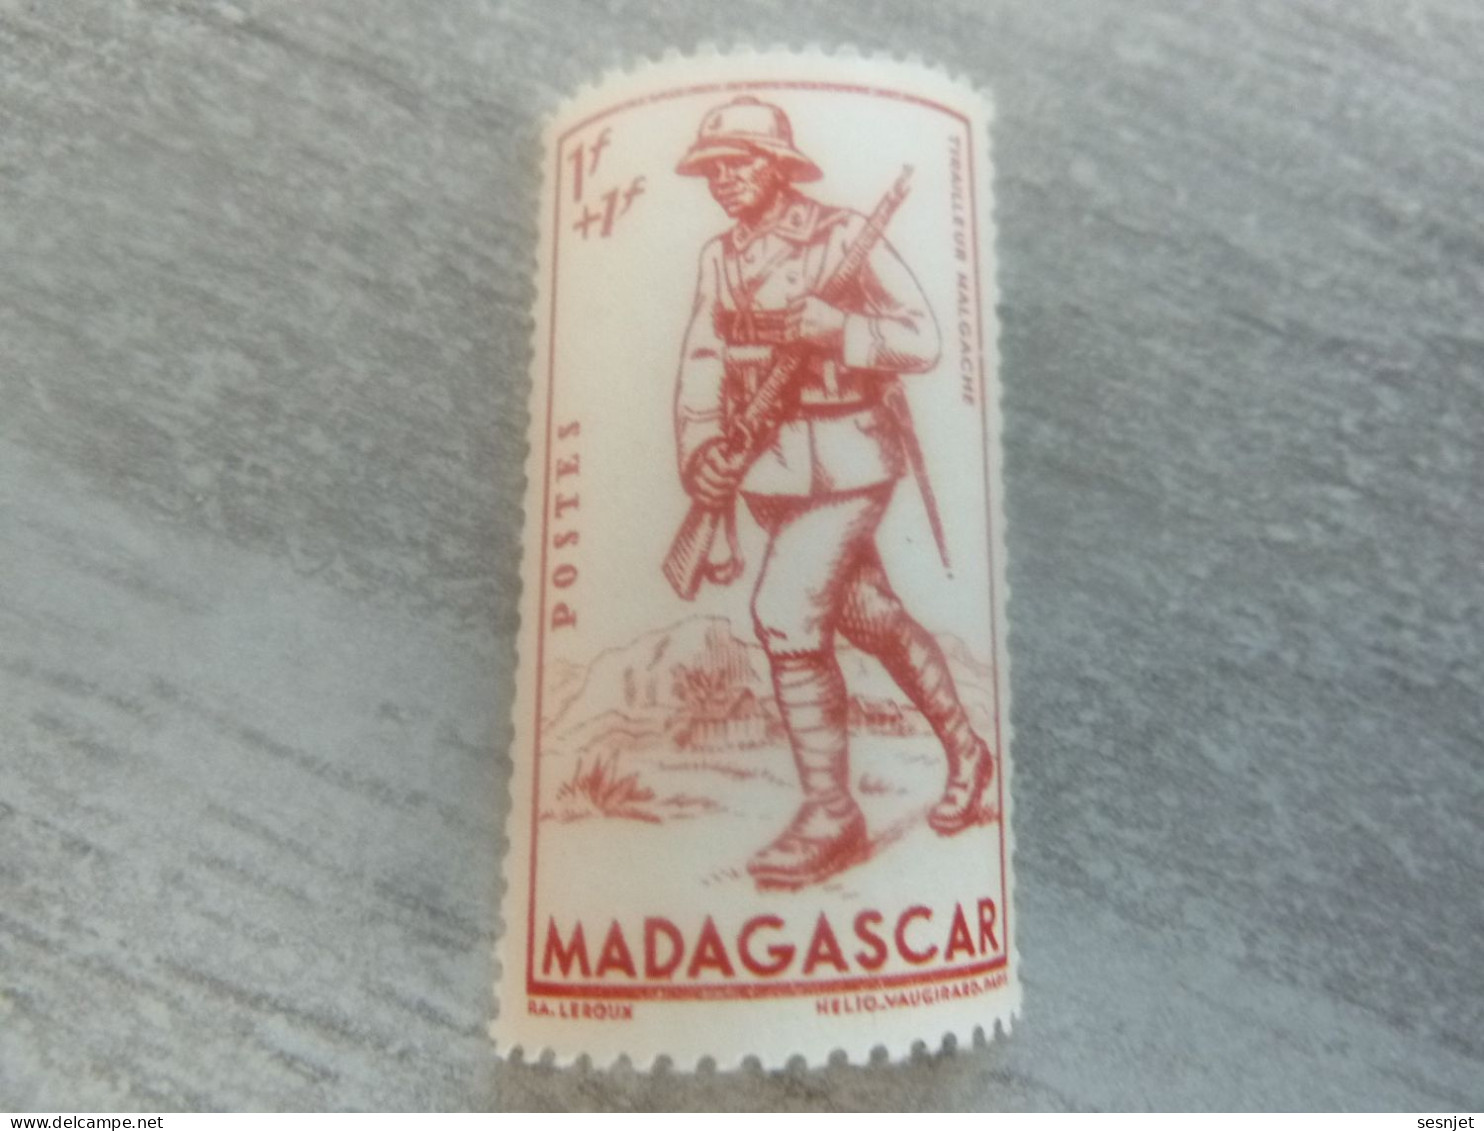 Madagascar - Tirailleur Malgache - 1f.+1f. - Yt 226 - Helio Vaugirard Paris - Rouge-orange - Neuf - Année 1941 - - Neufs